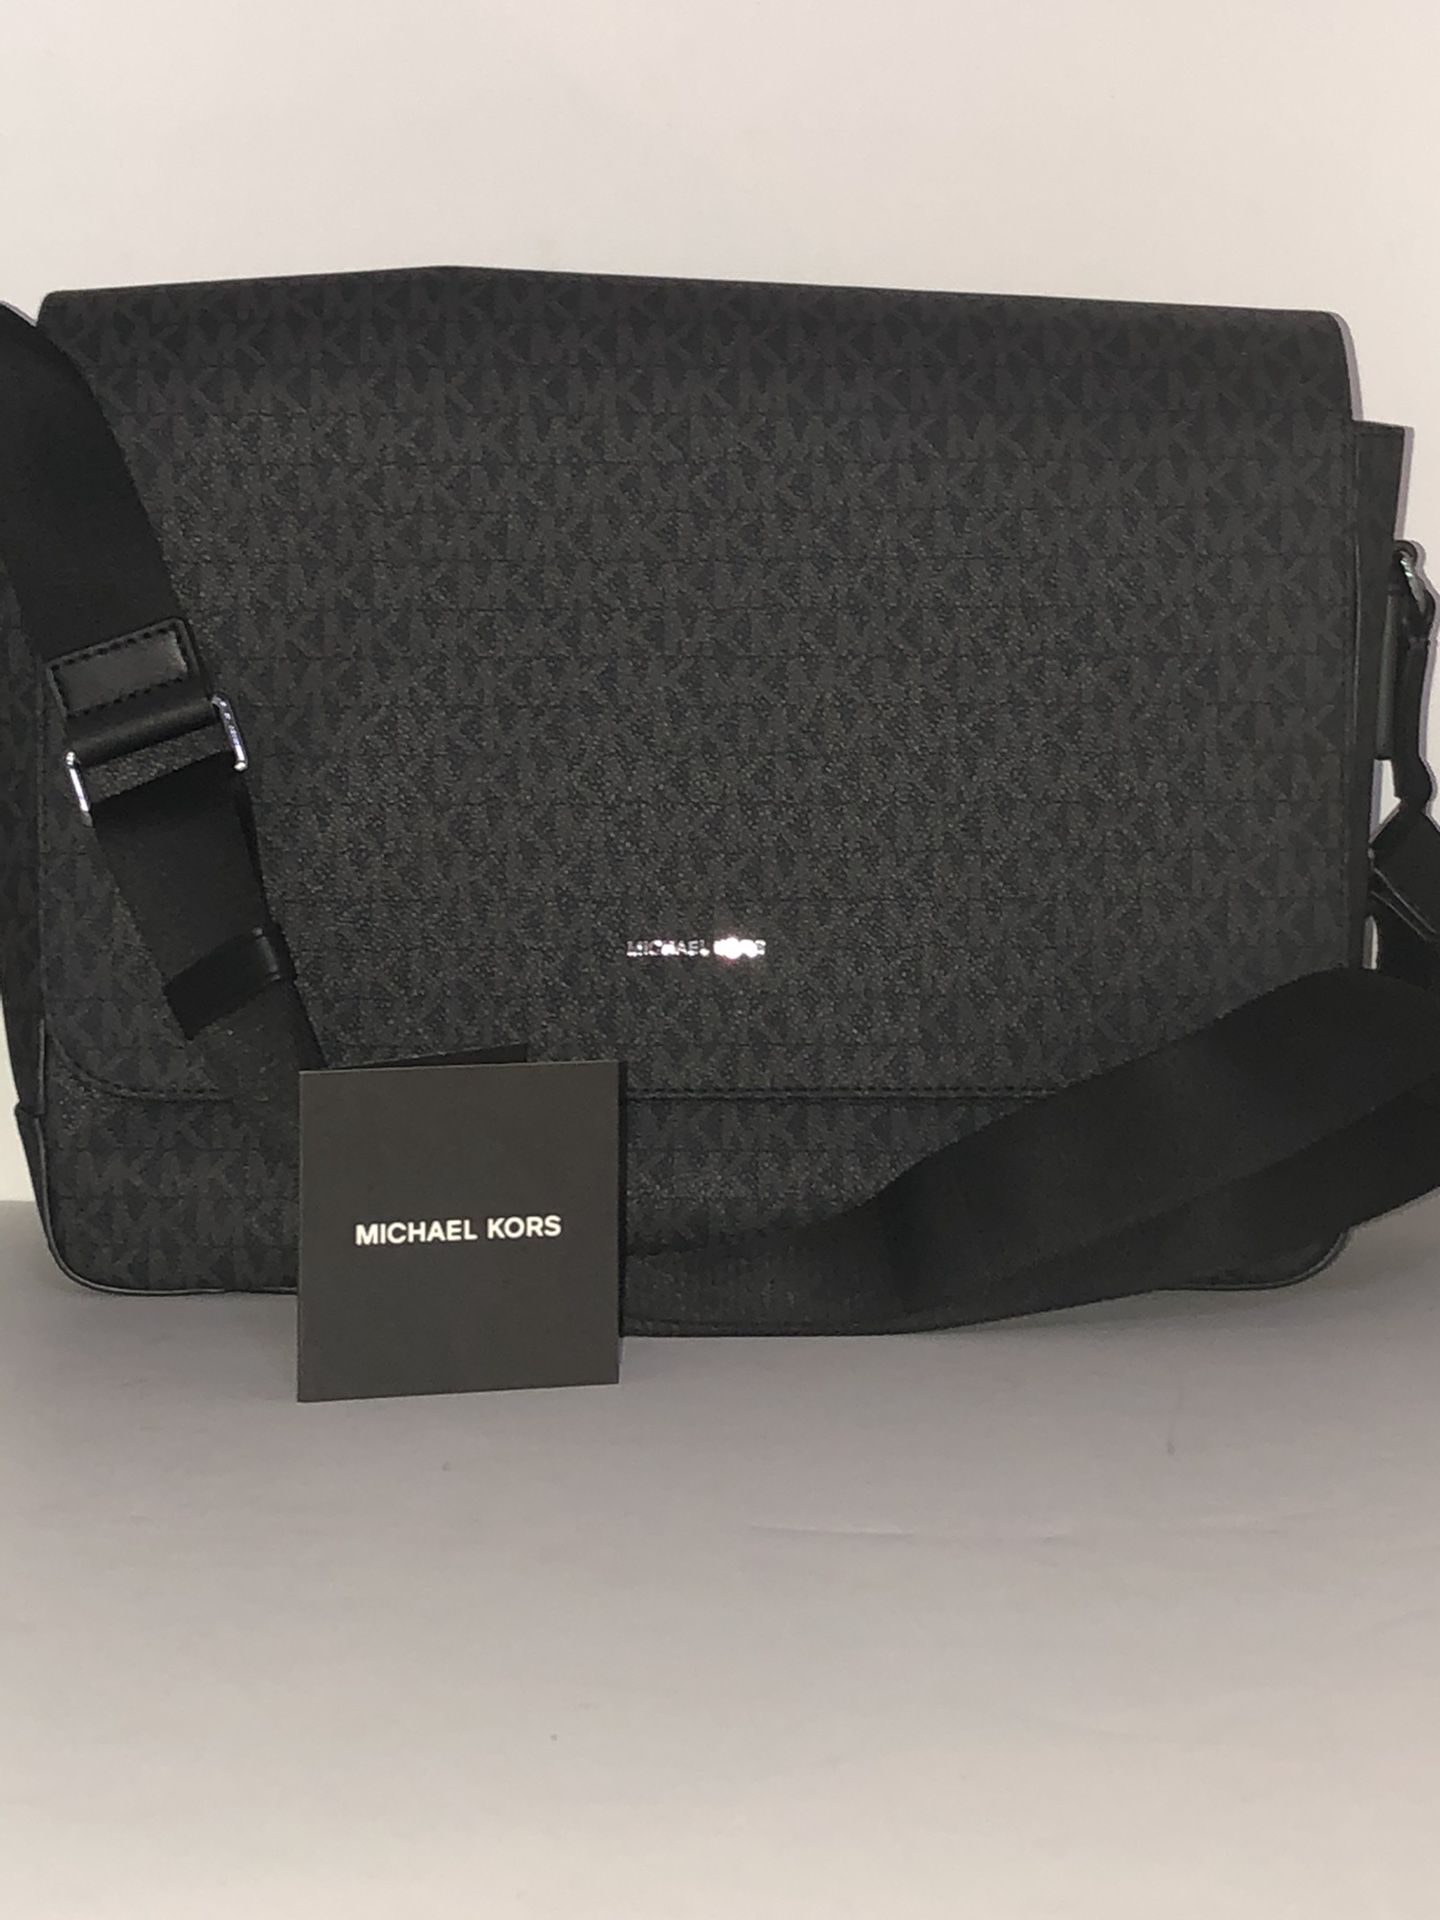 Michael Kors Messenger/Laptop Bag